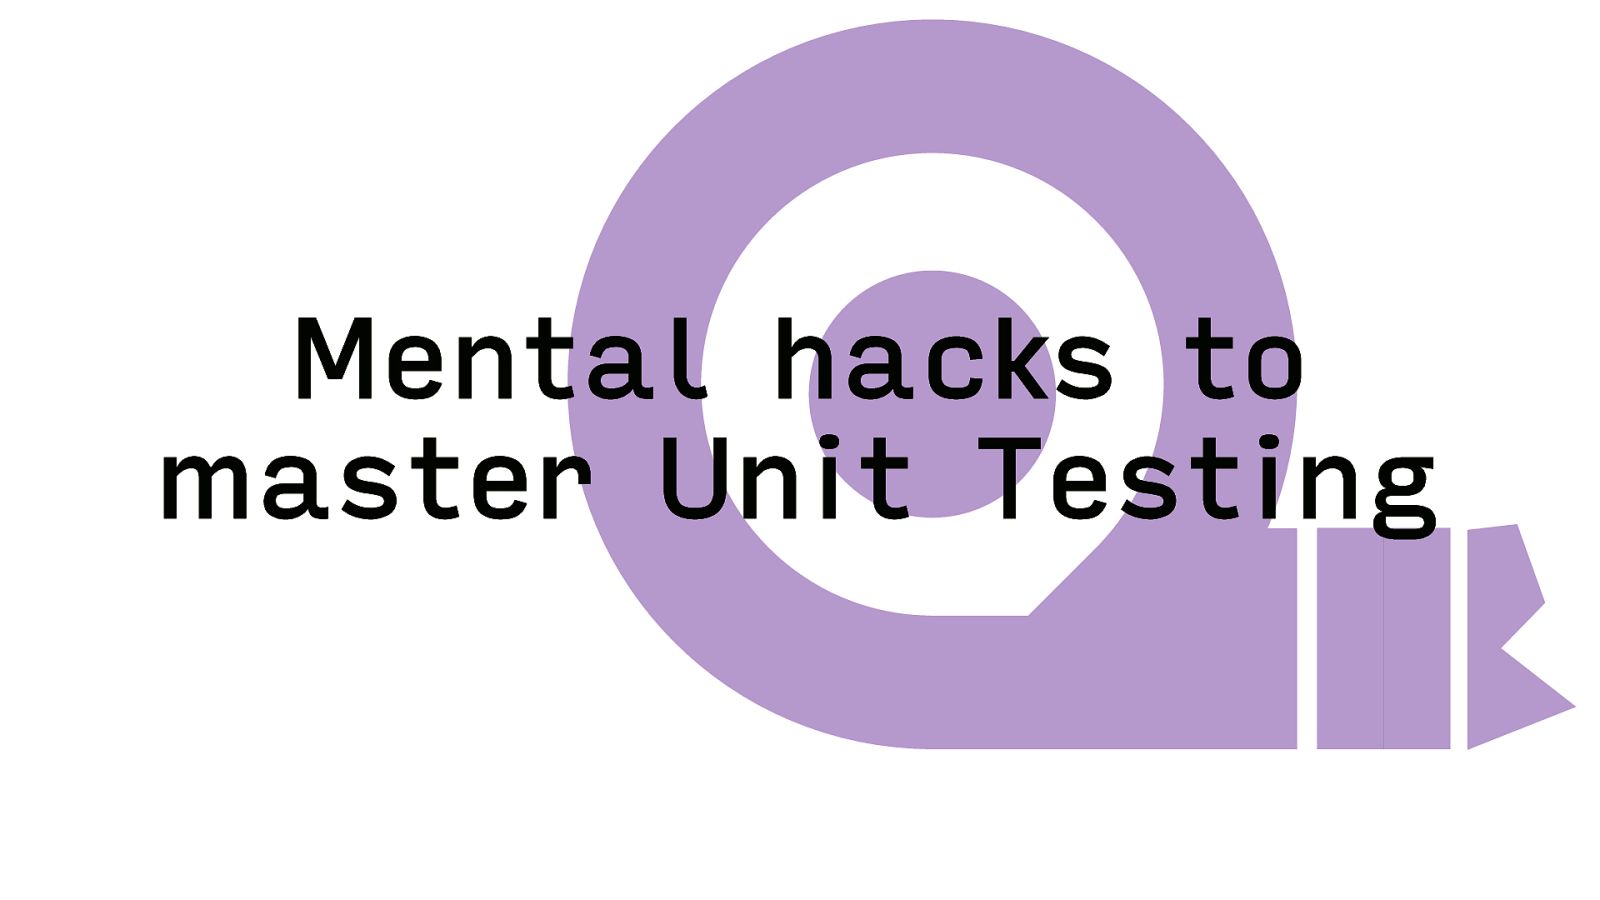 Mental hacks tomaster Unit Testing